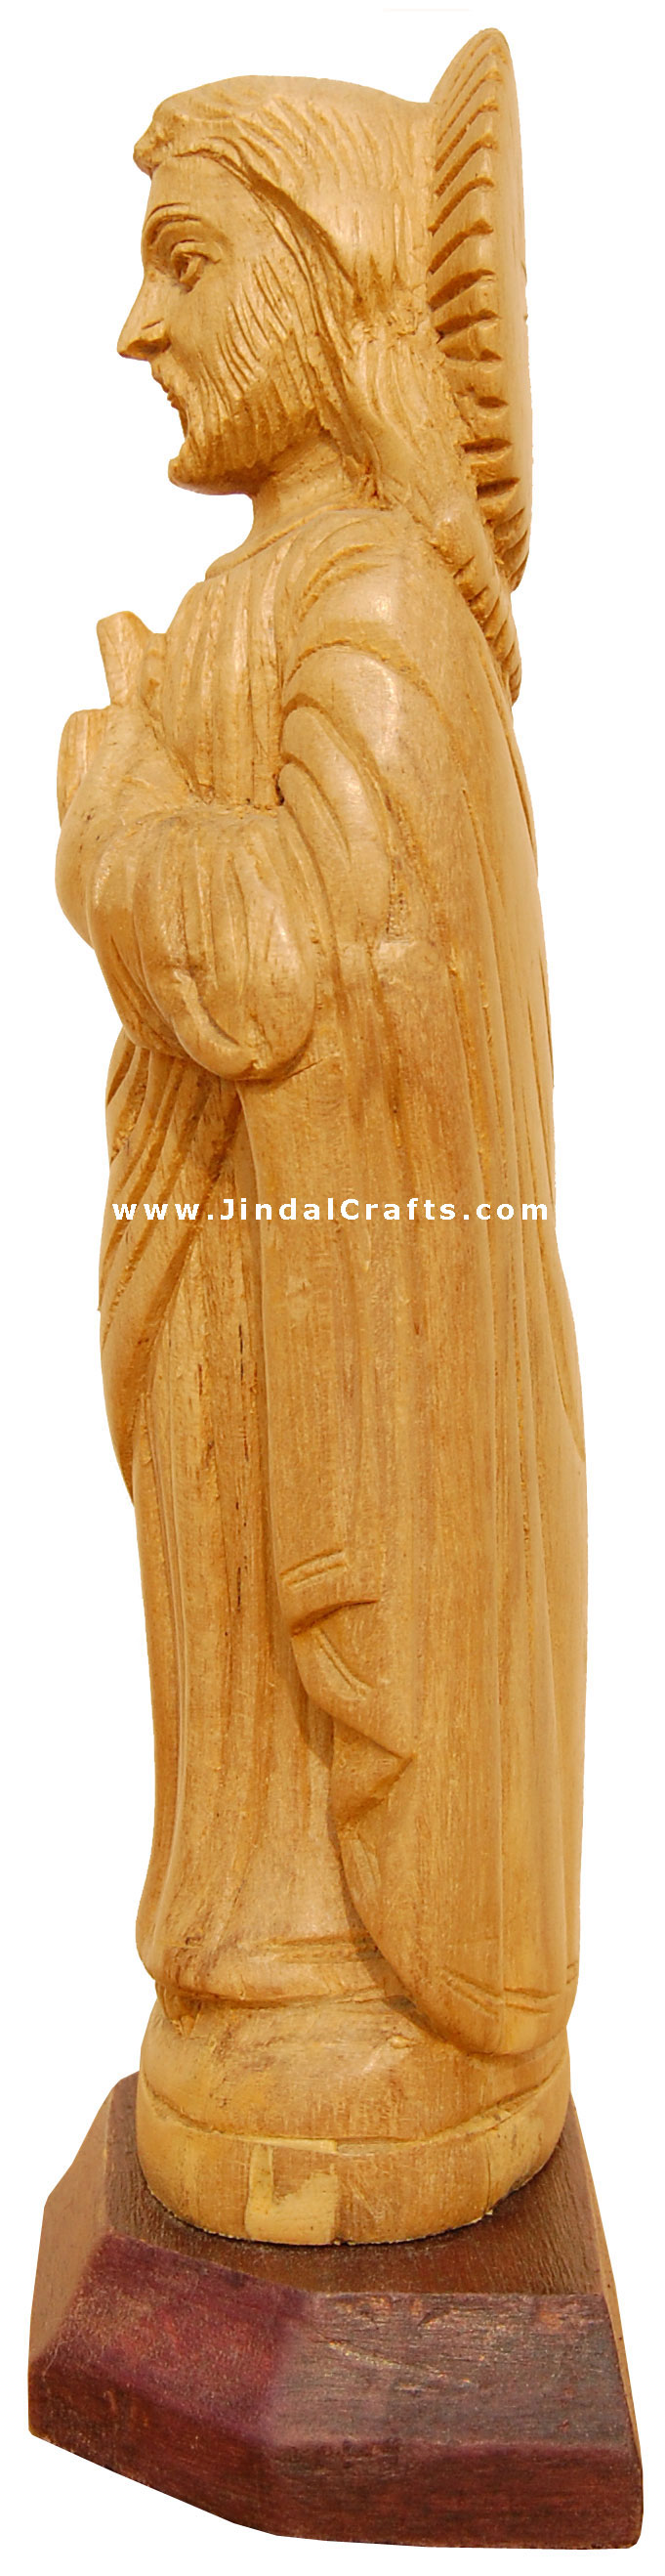 Handcrafted Wooden God Jesus Christian Sculpture Art